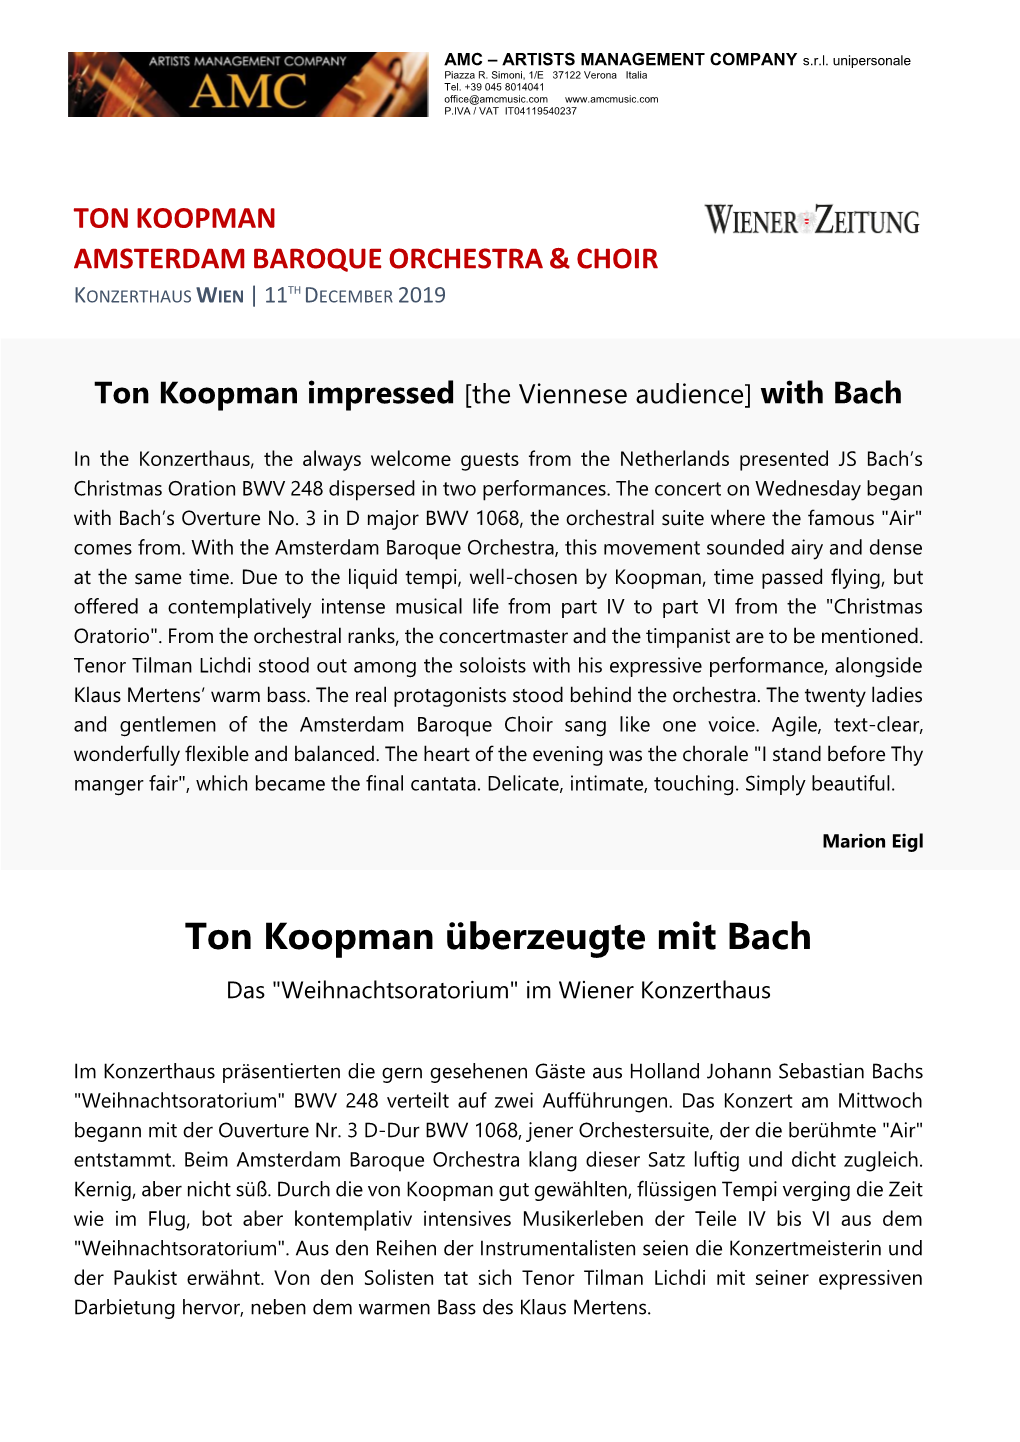 Ton Koopman Überzeugte Mit Bach